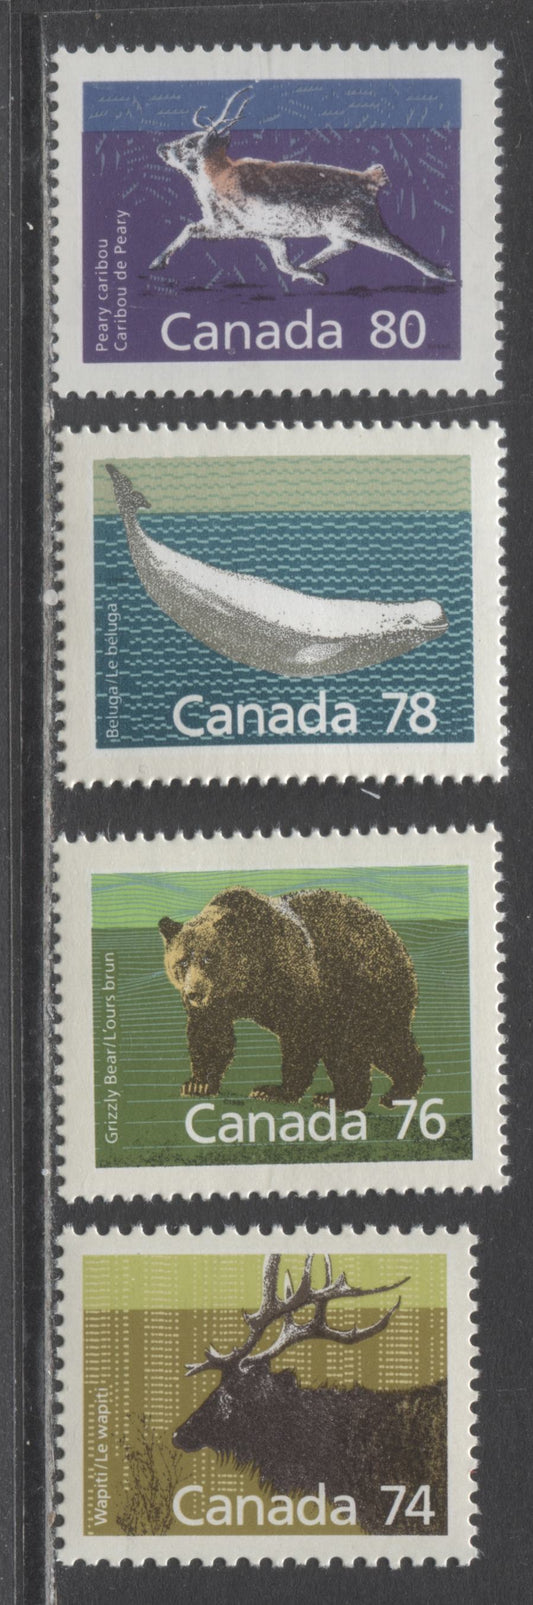 Canada #1177-1180 74c-80c Multicolored Wapiti-Peary Caribou, 1988-1990 International Rate Issue, 4 VFNH Singles